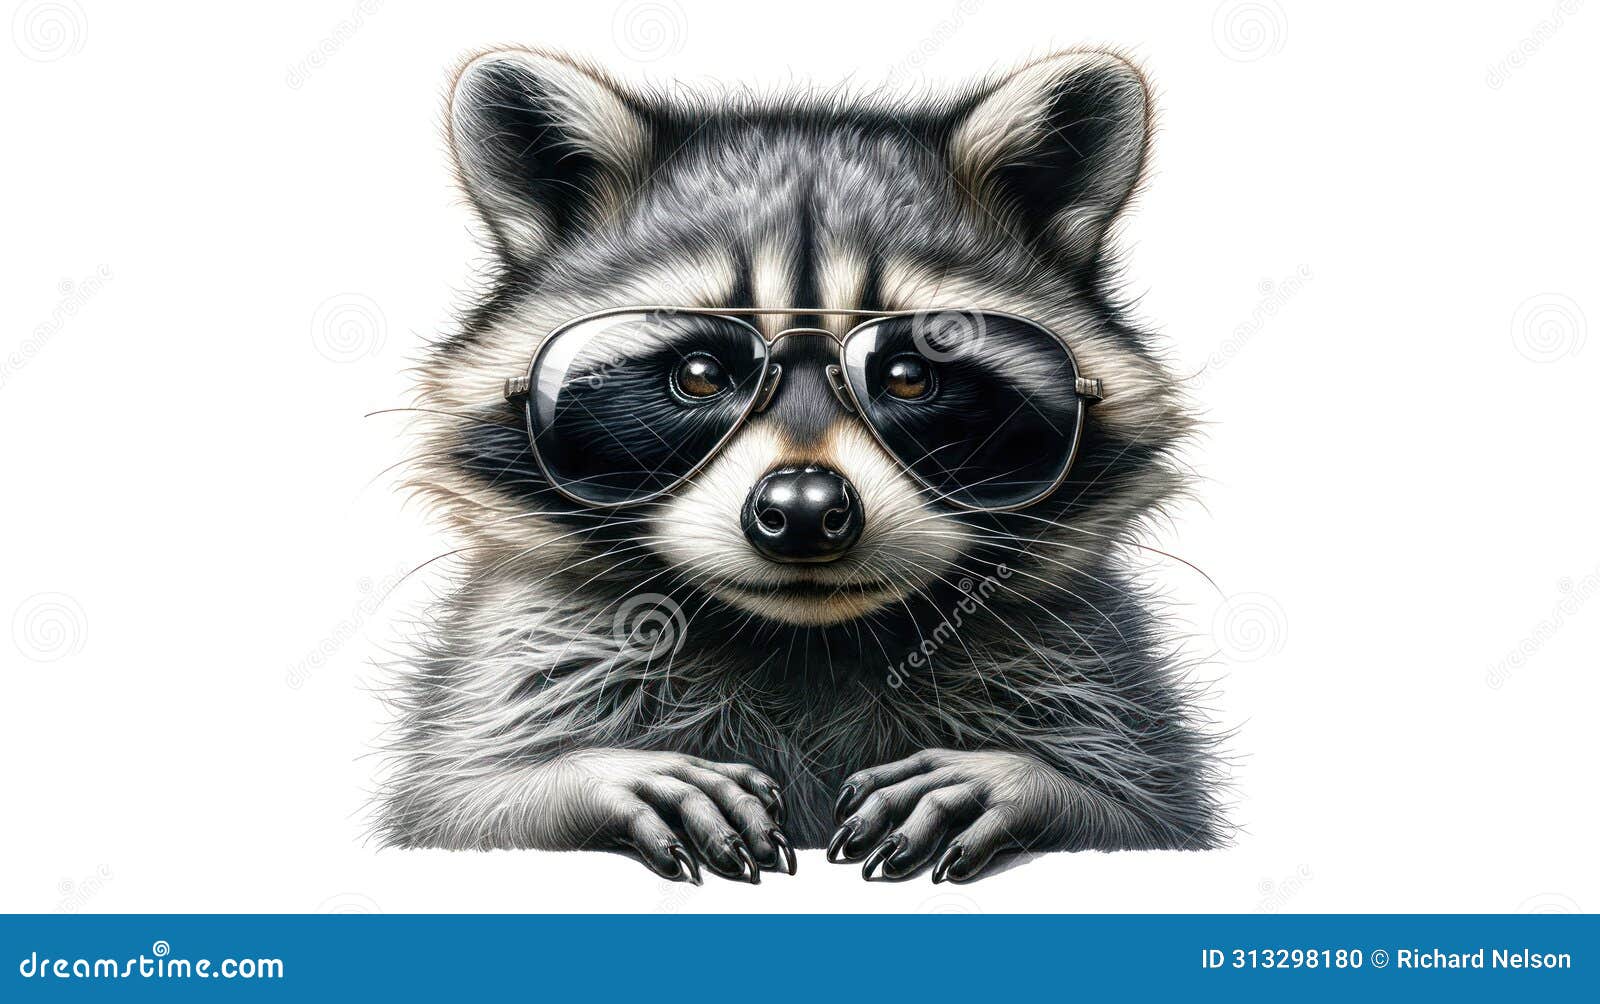 raccoon wearing sunglasses  on white background